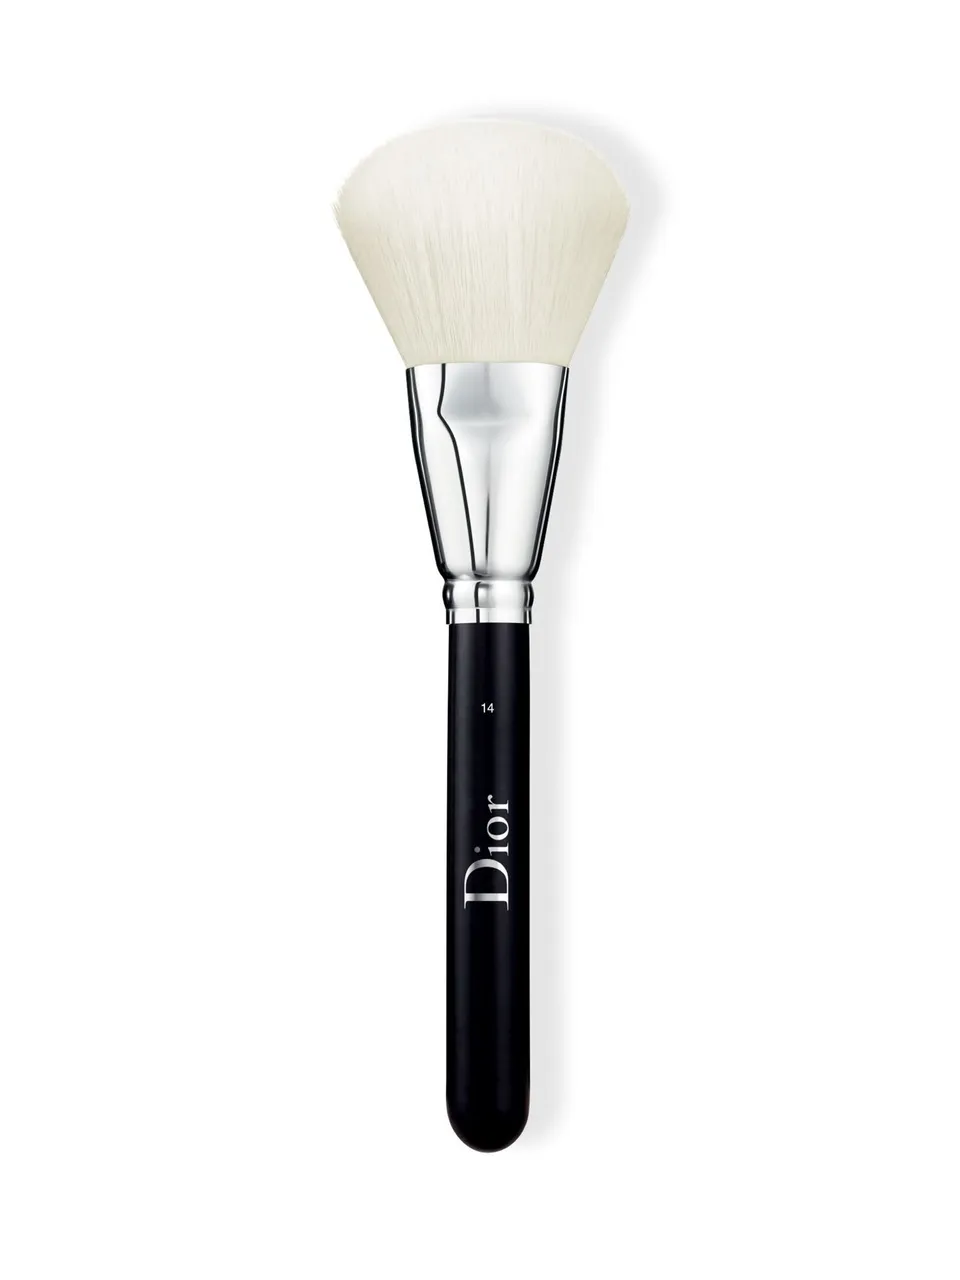 Christian Dior Backstage Powder Brush 14 - Unisex